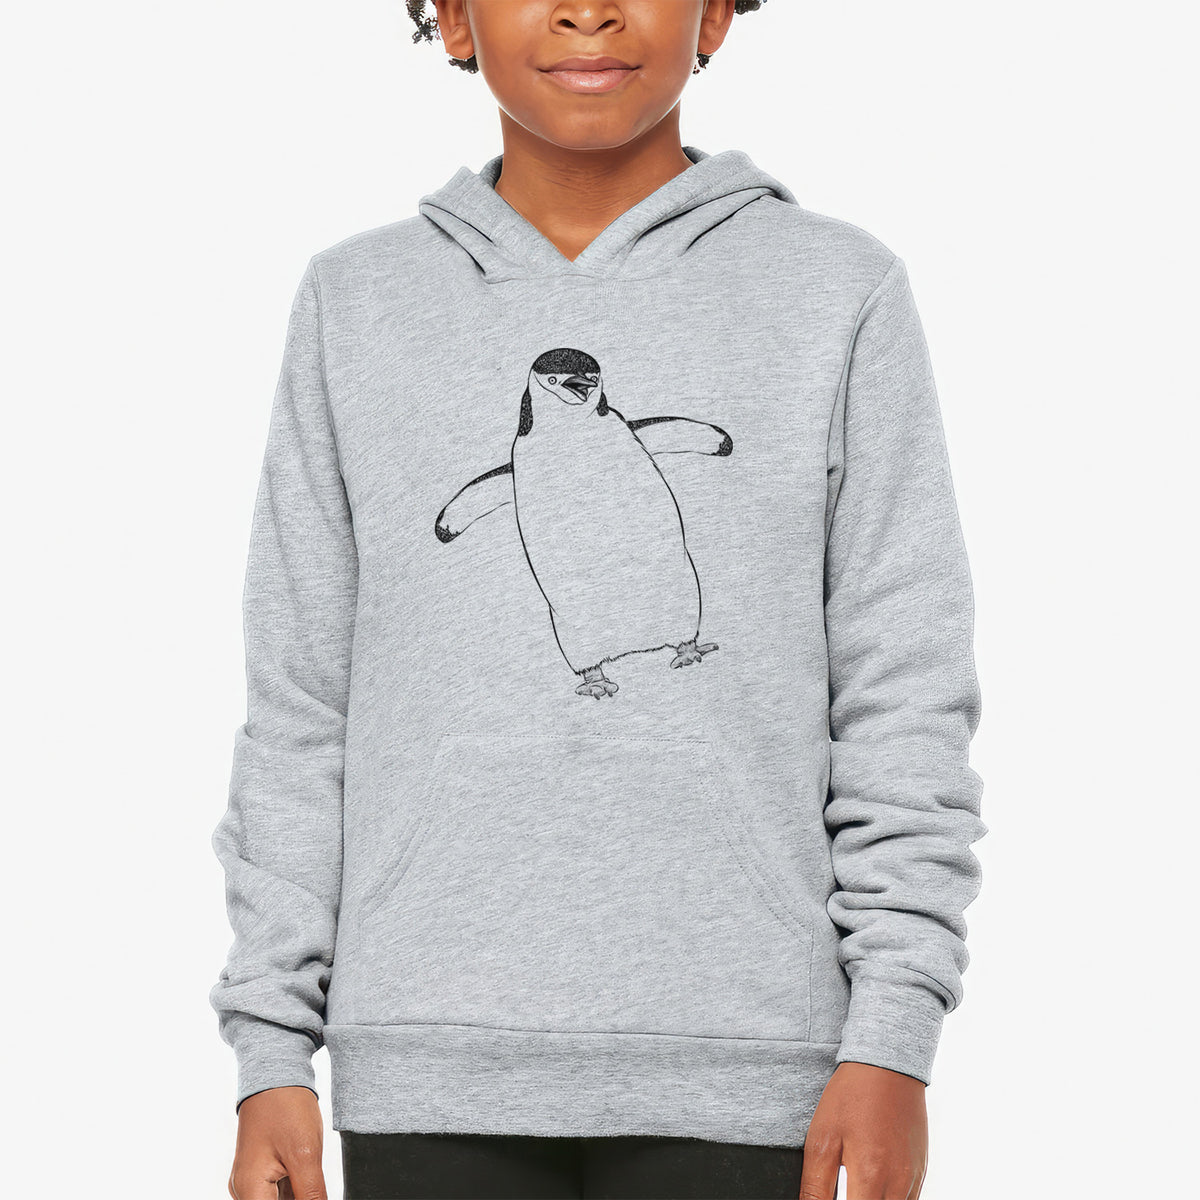 Chinstrap Penguin - Pygoscelis antarcticus - Youth Hoodie Sweatshirt